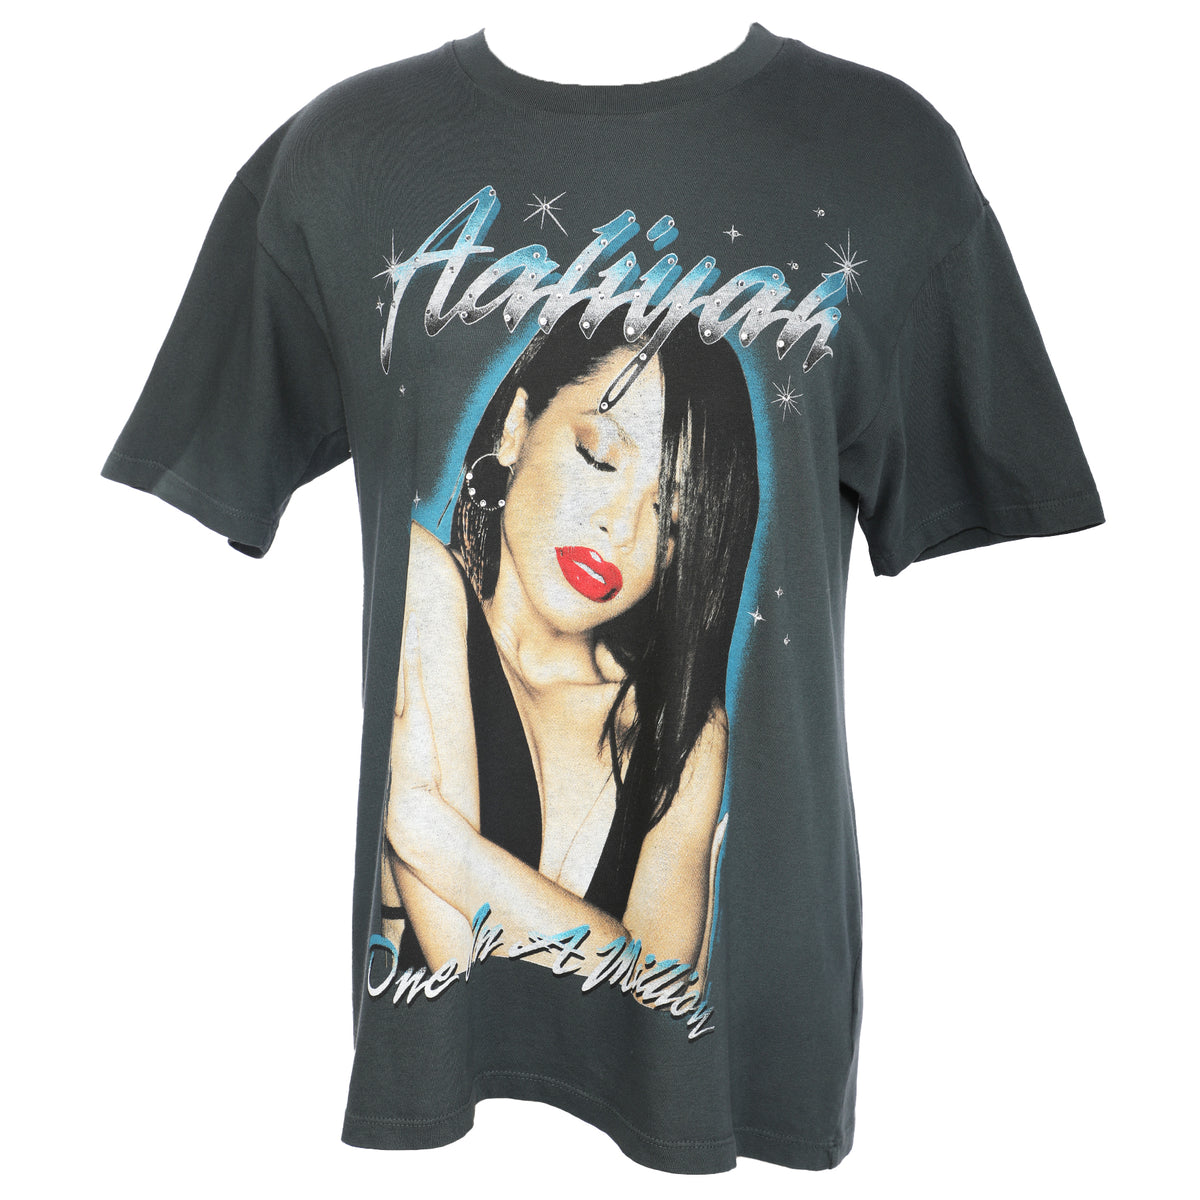 Daydreamer - Aaliyah One in a Million T-Shirt